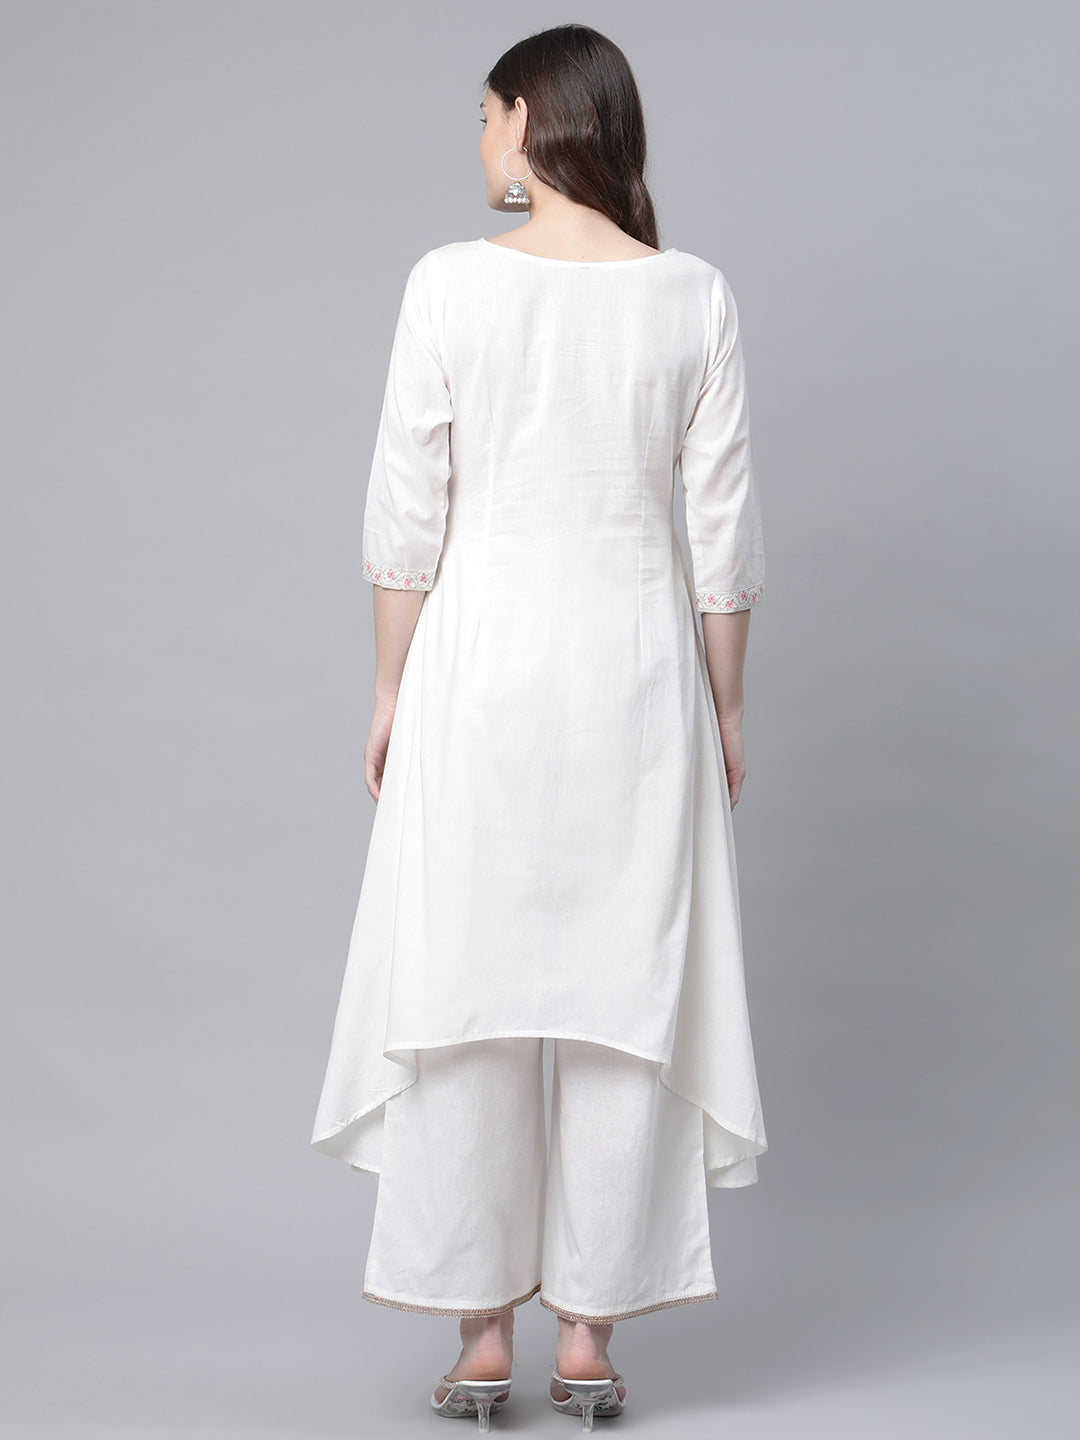 Women's Off White Cotton Printed Asymmetric Kurta Palazzo Set - Ahalyaa